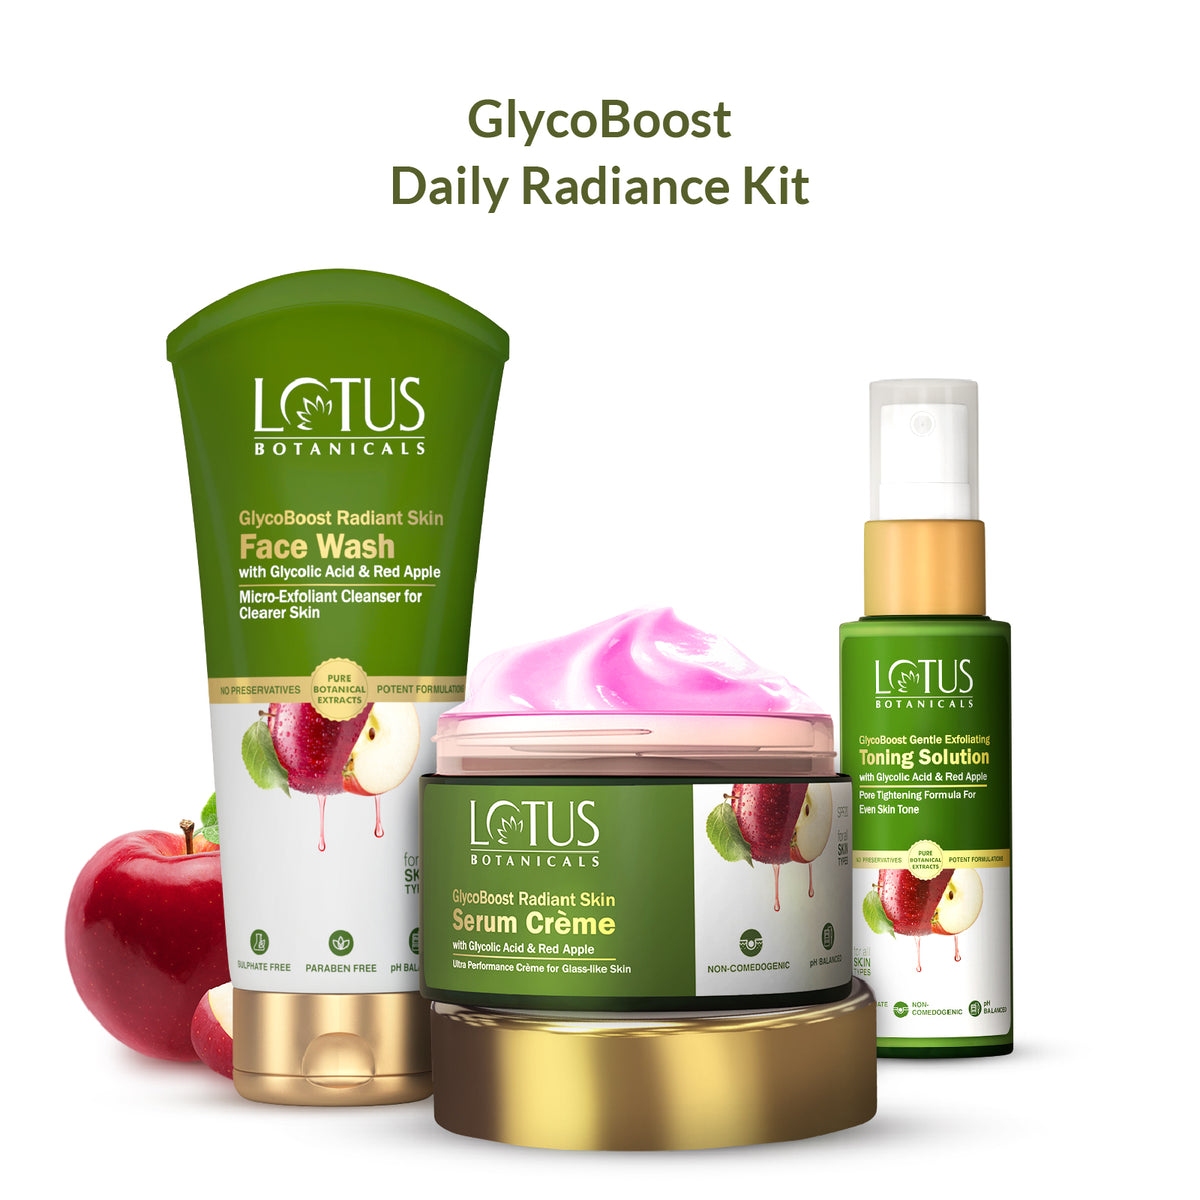 Lotus Botanicals GlycoBoost Daily Radiance Kit